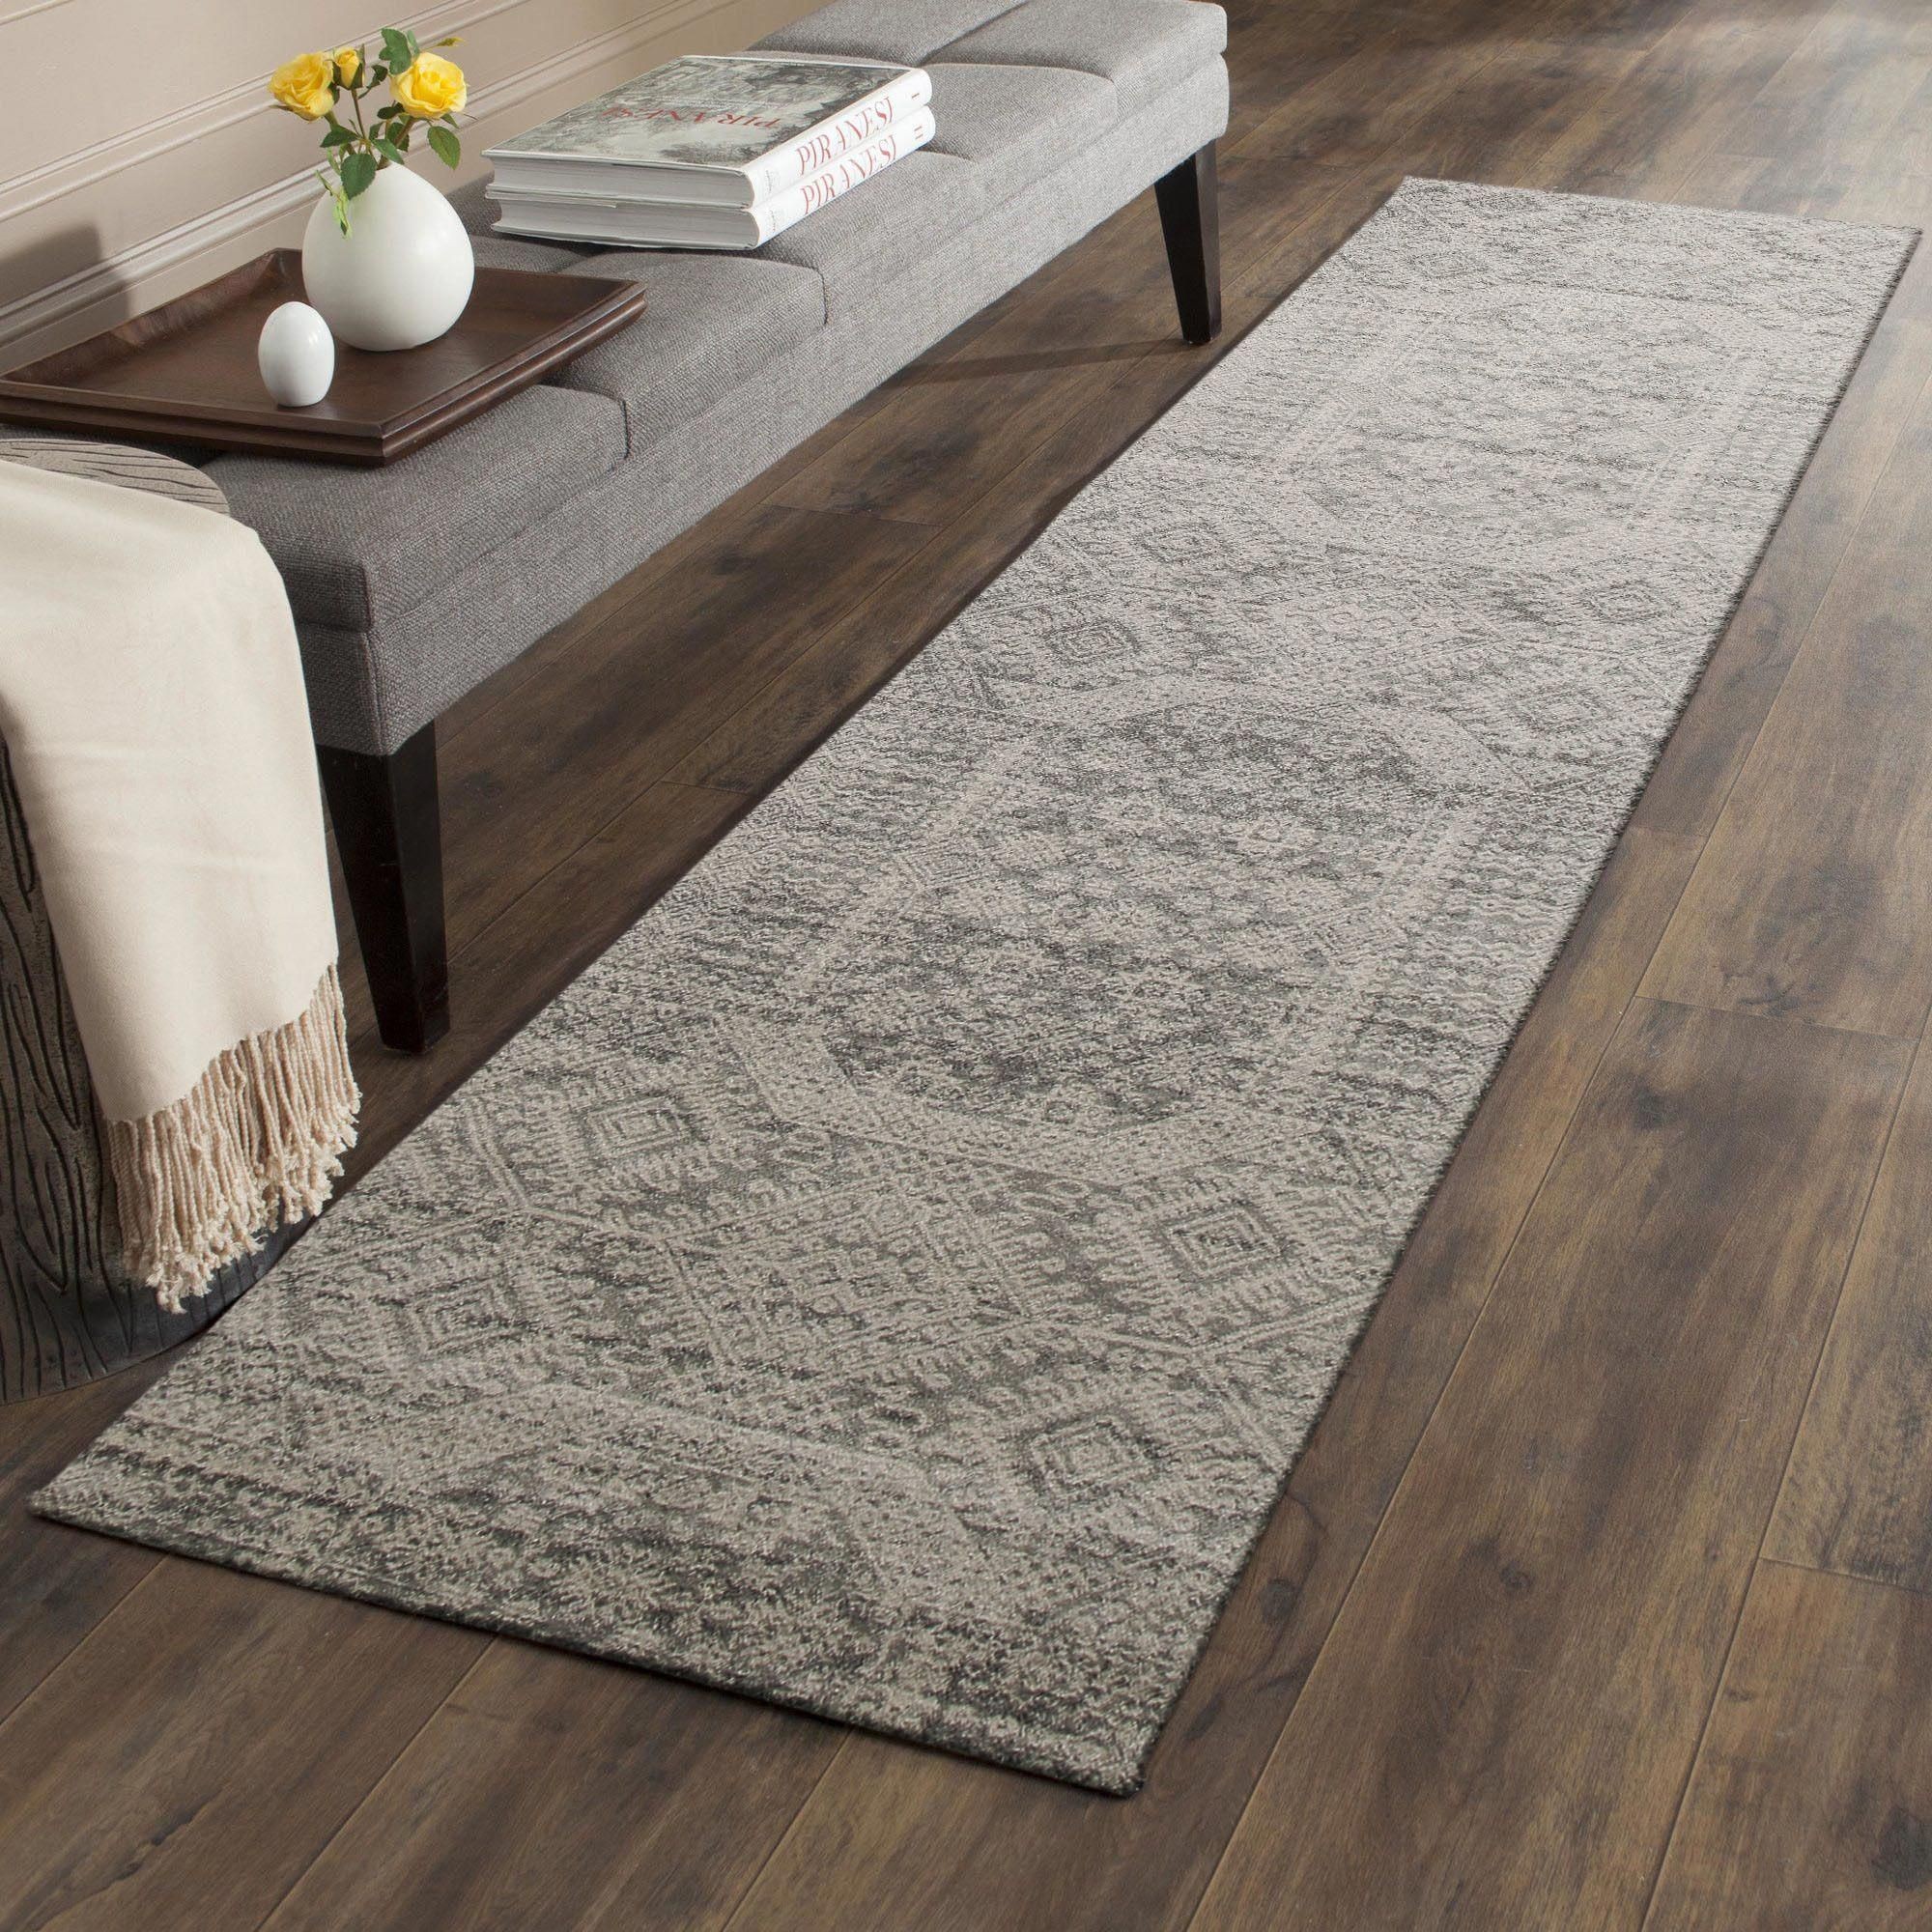 Large rugs dubai-pic_1